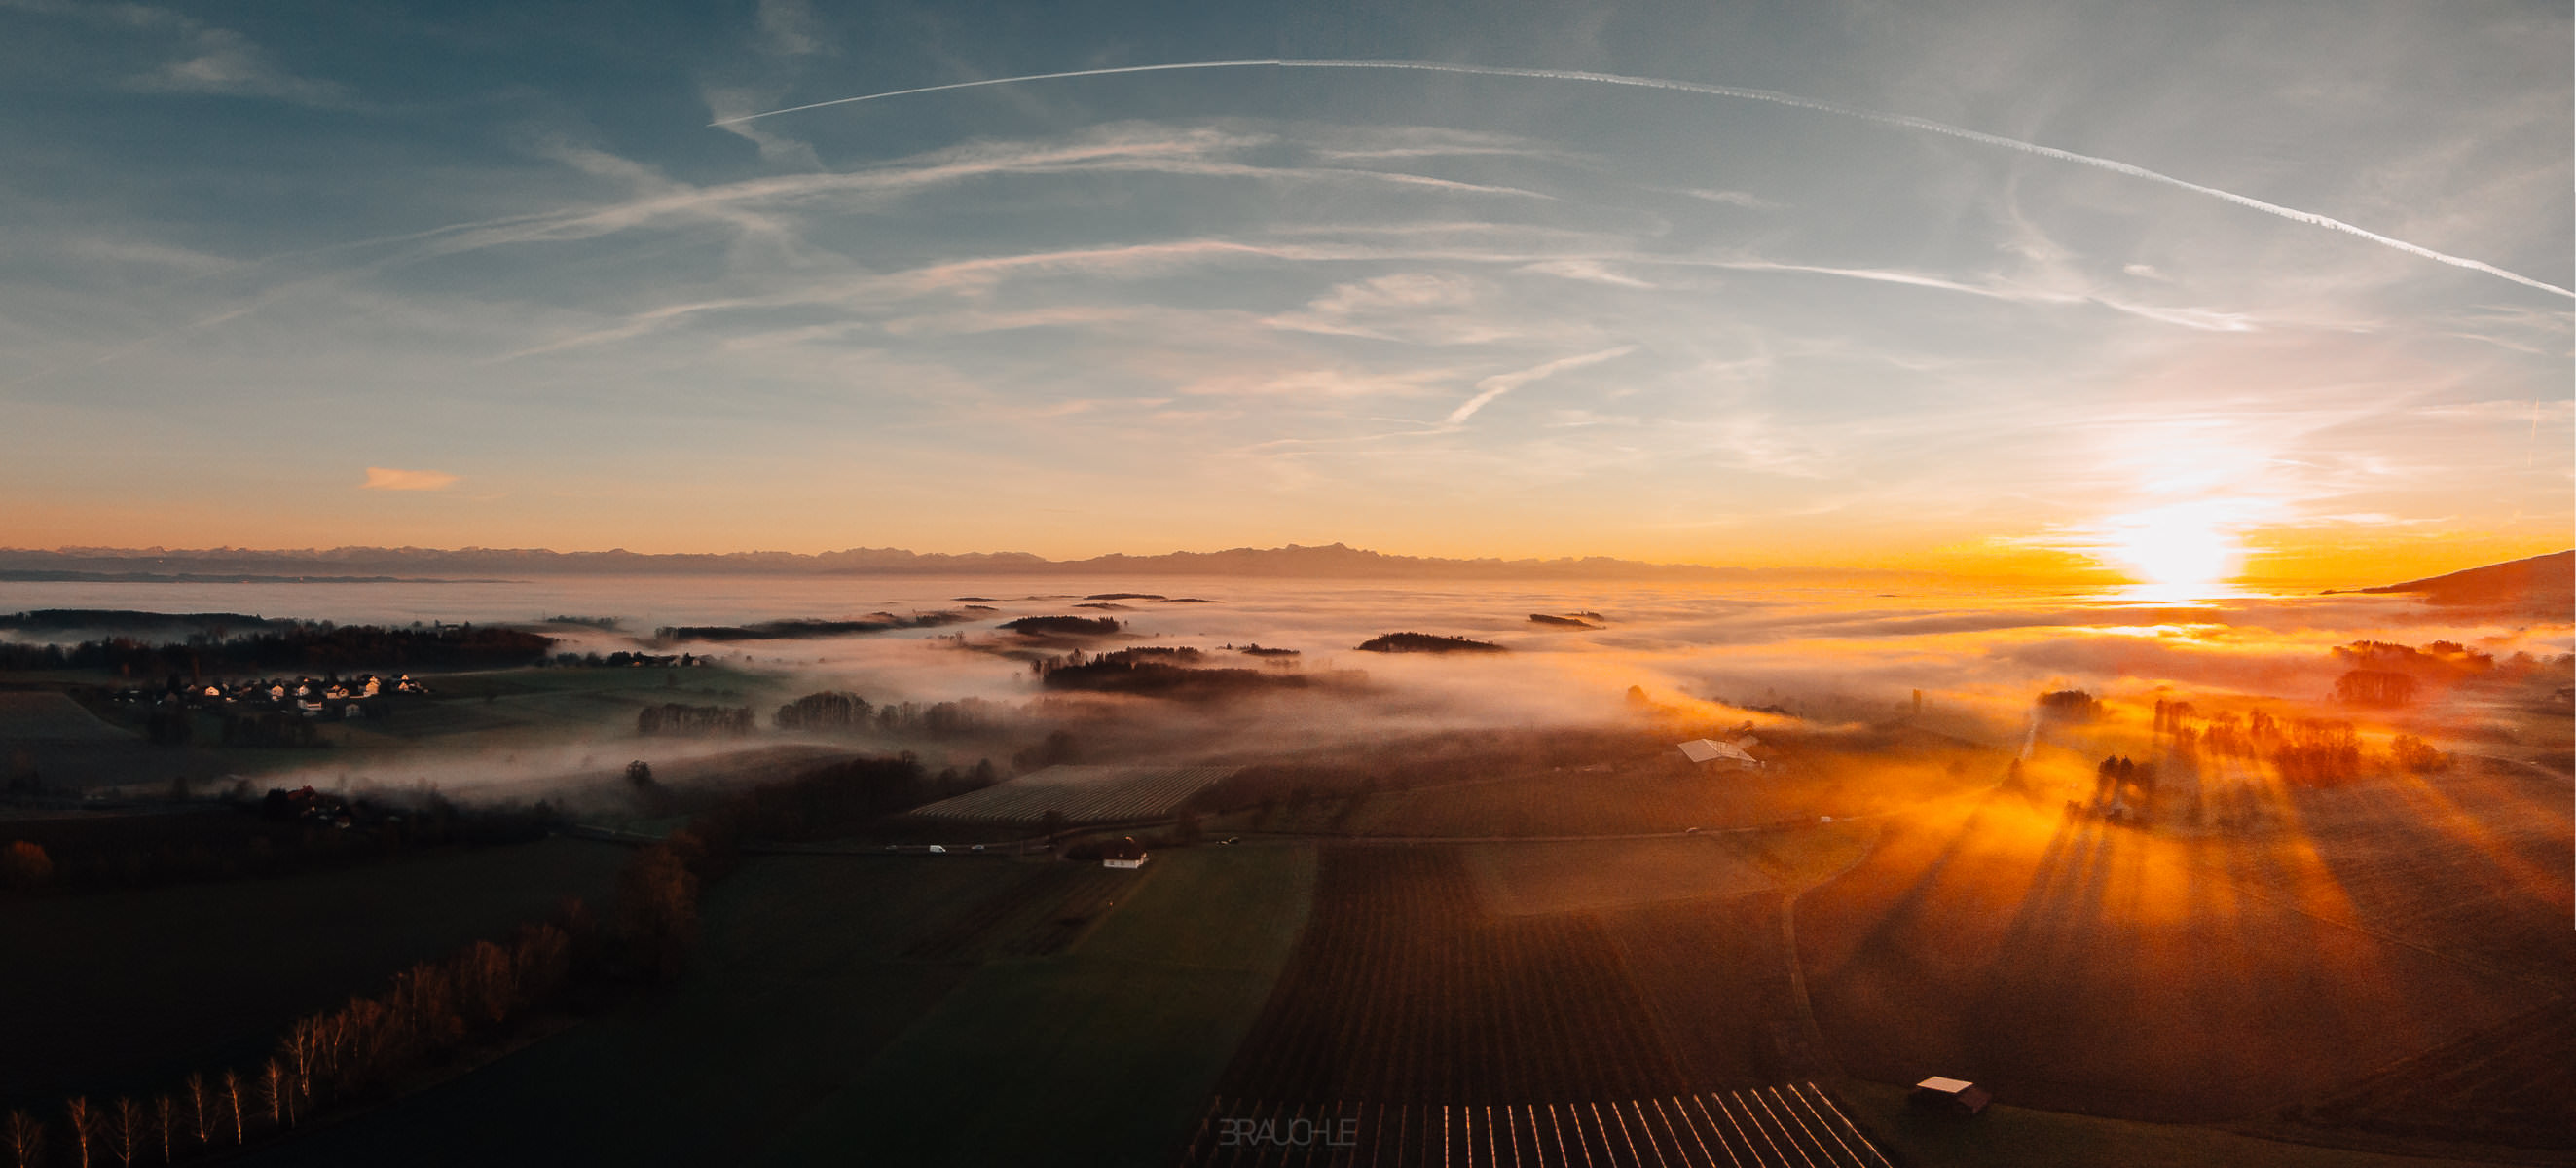 sonnenuntergang bodensee saentis luftaufnahme 0004 - Luftaufnahmen vom Sonnenuntergang über dem Bodensee